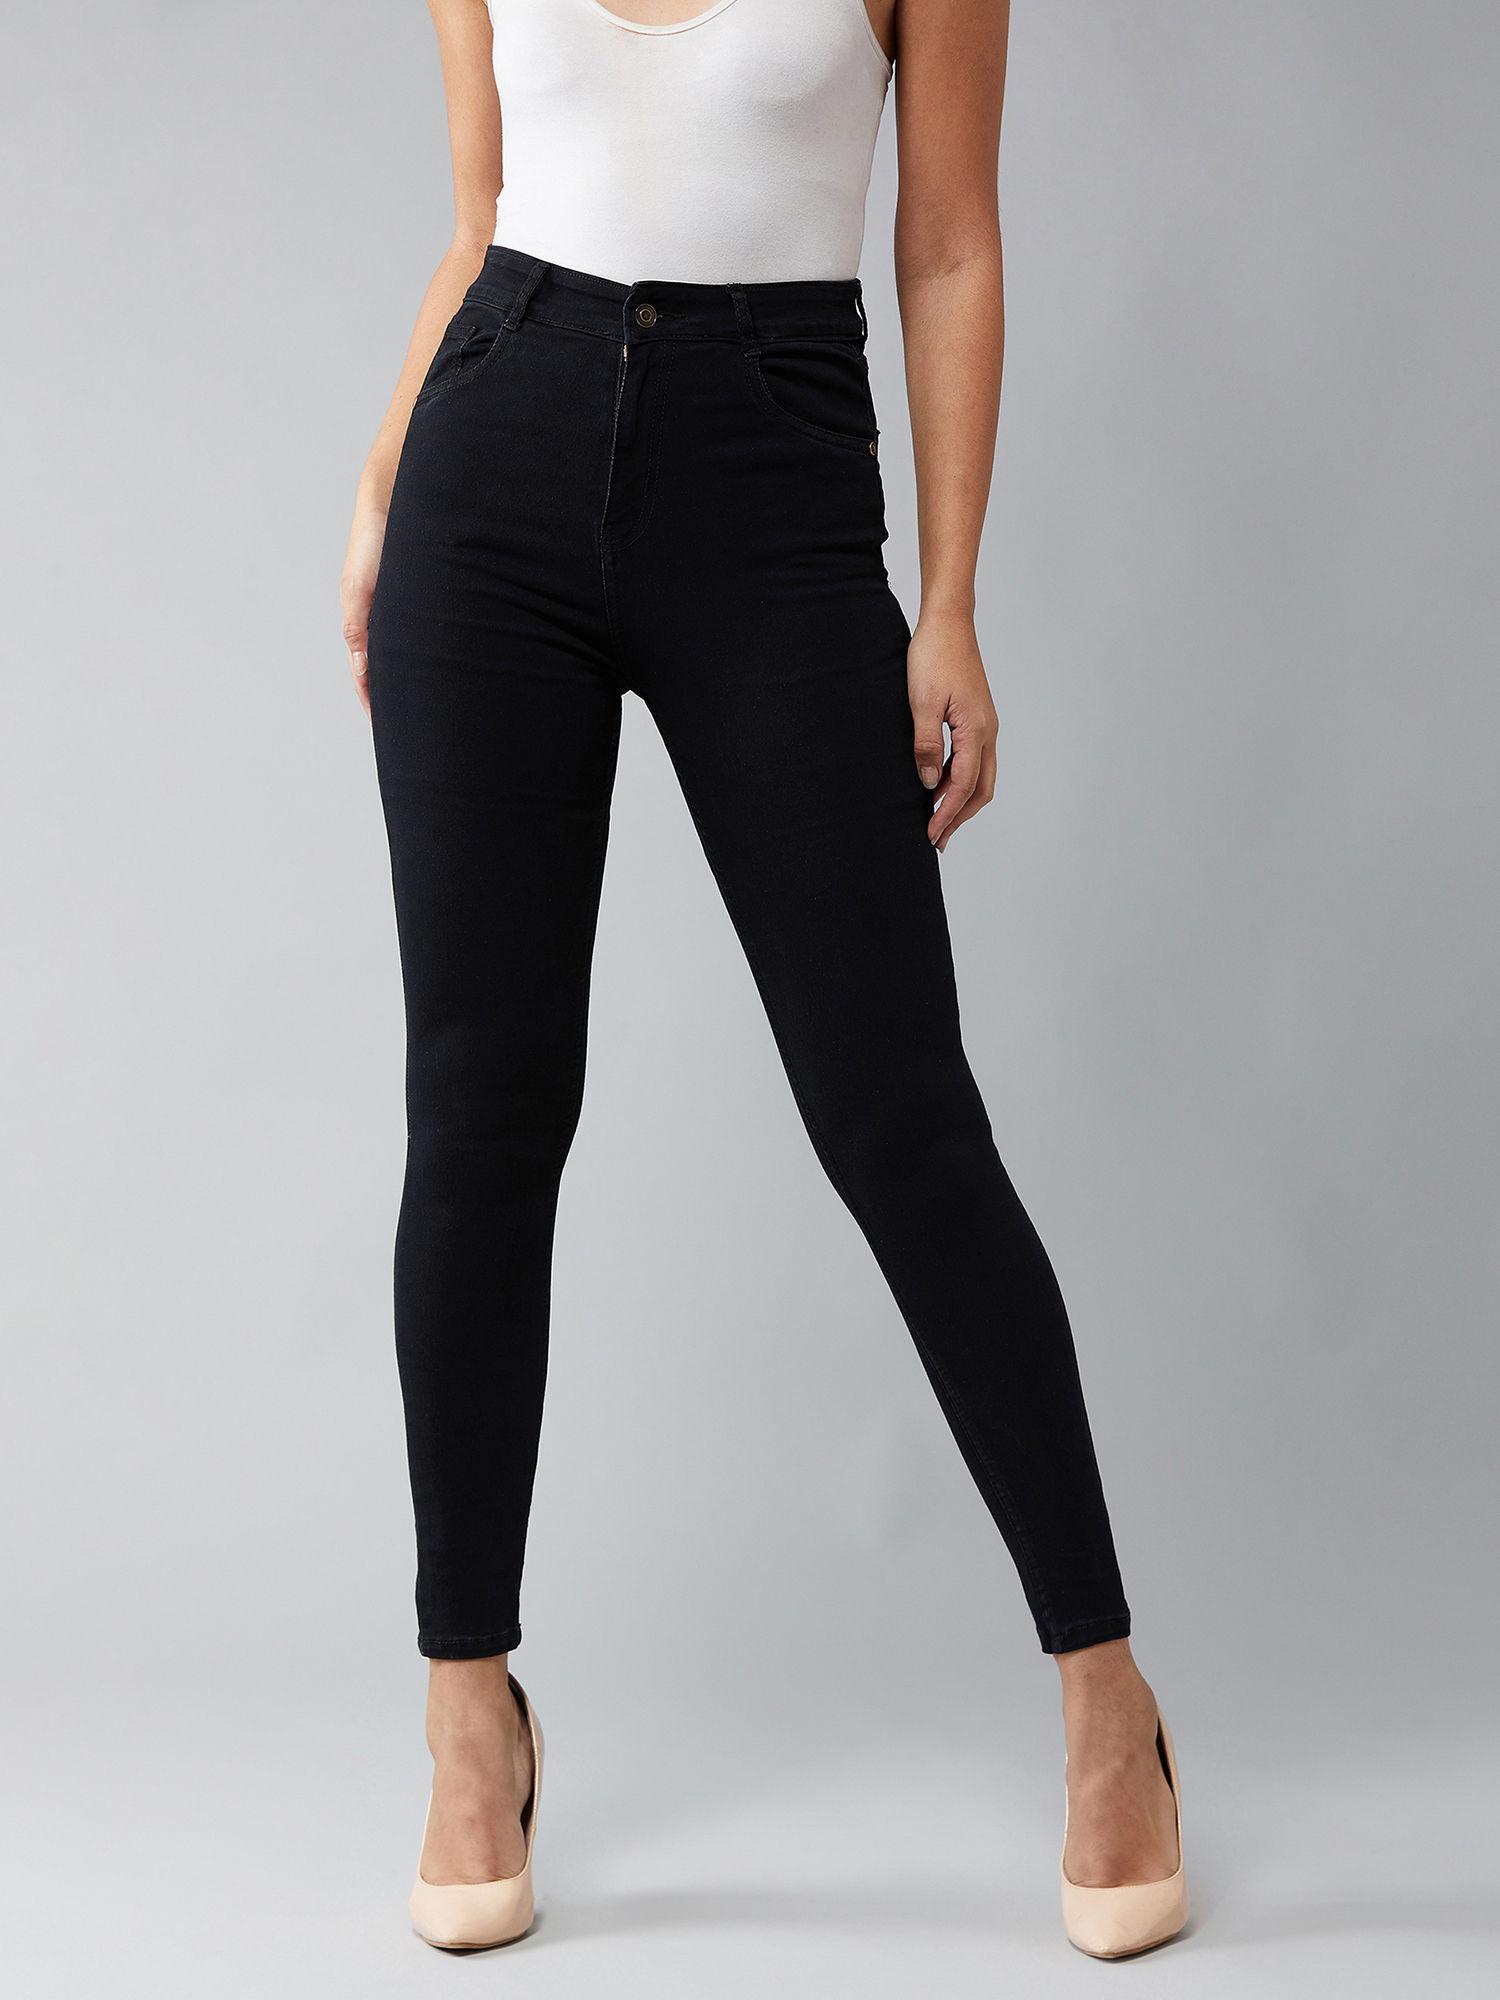 black skinny fit high rise denim jeans